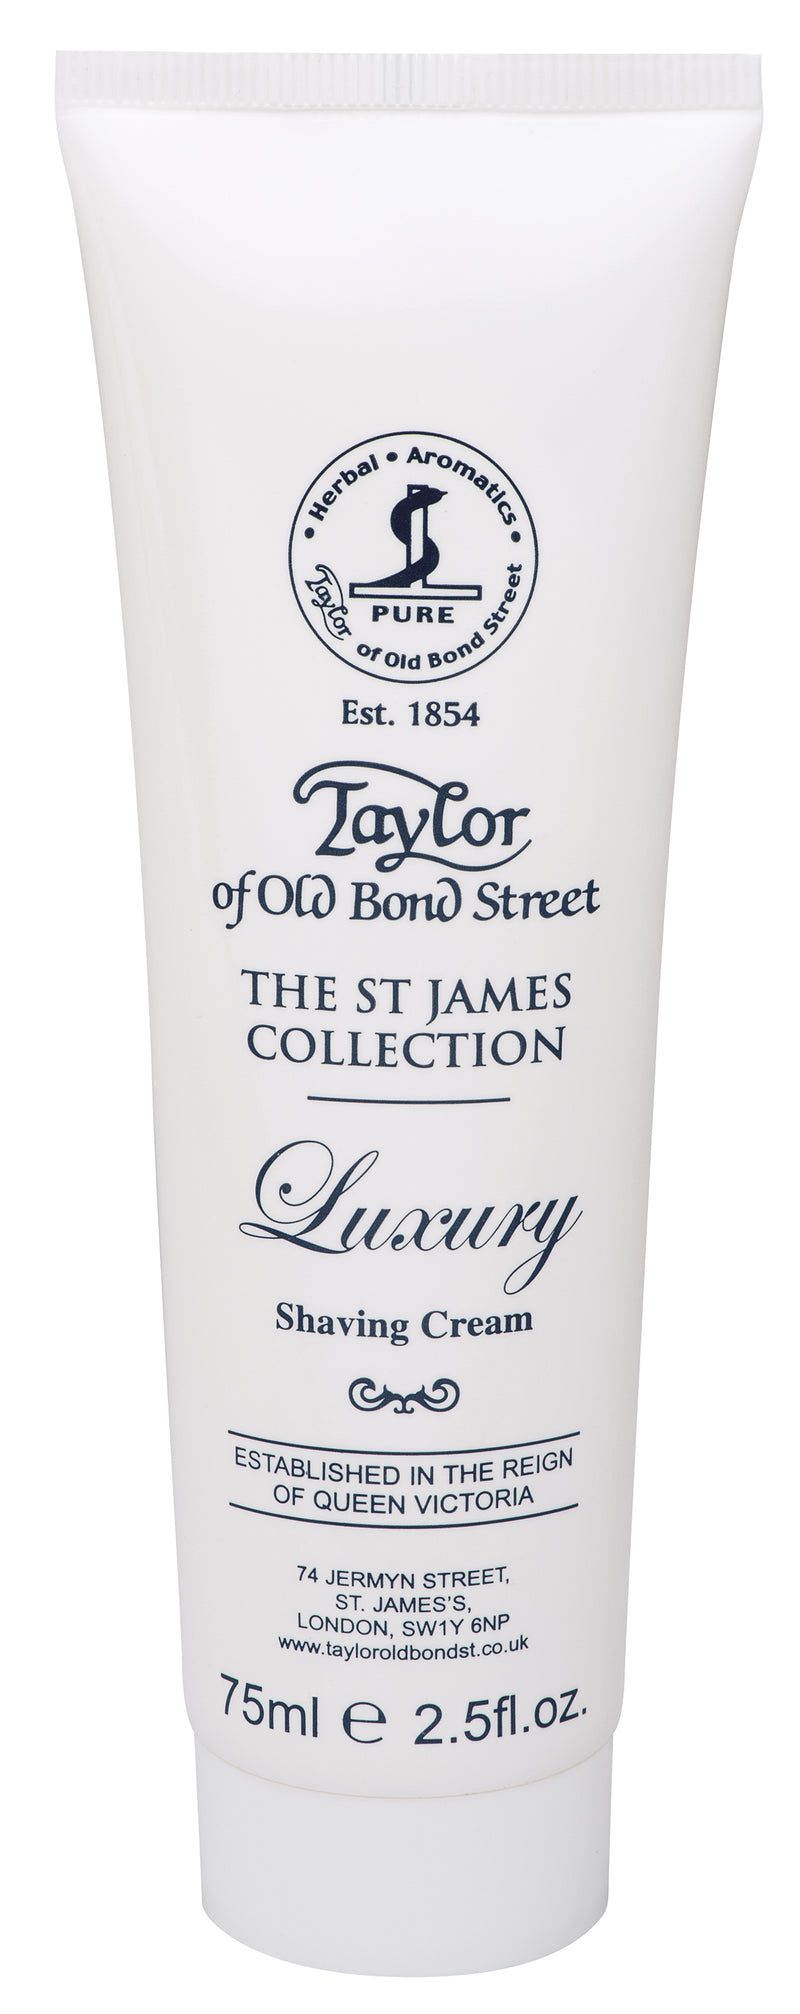 Taylor St. James Shaving Cream Tube